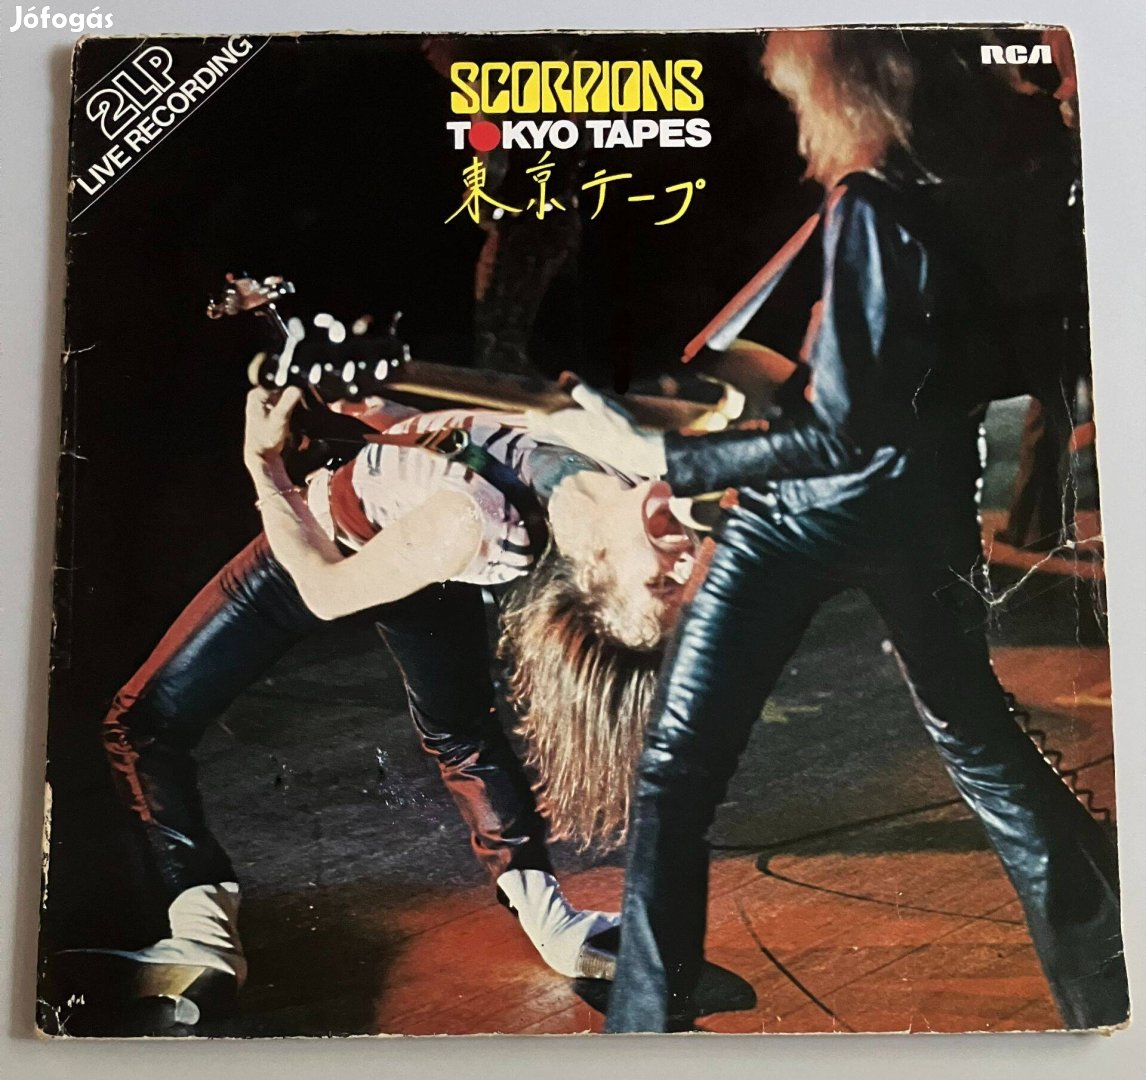 Scorpions - Tokyo Tapes (német, kék címke, 1978) VG